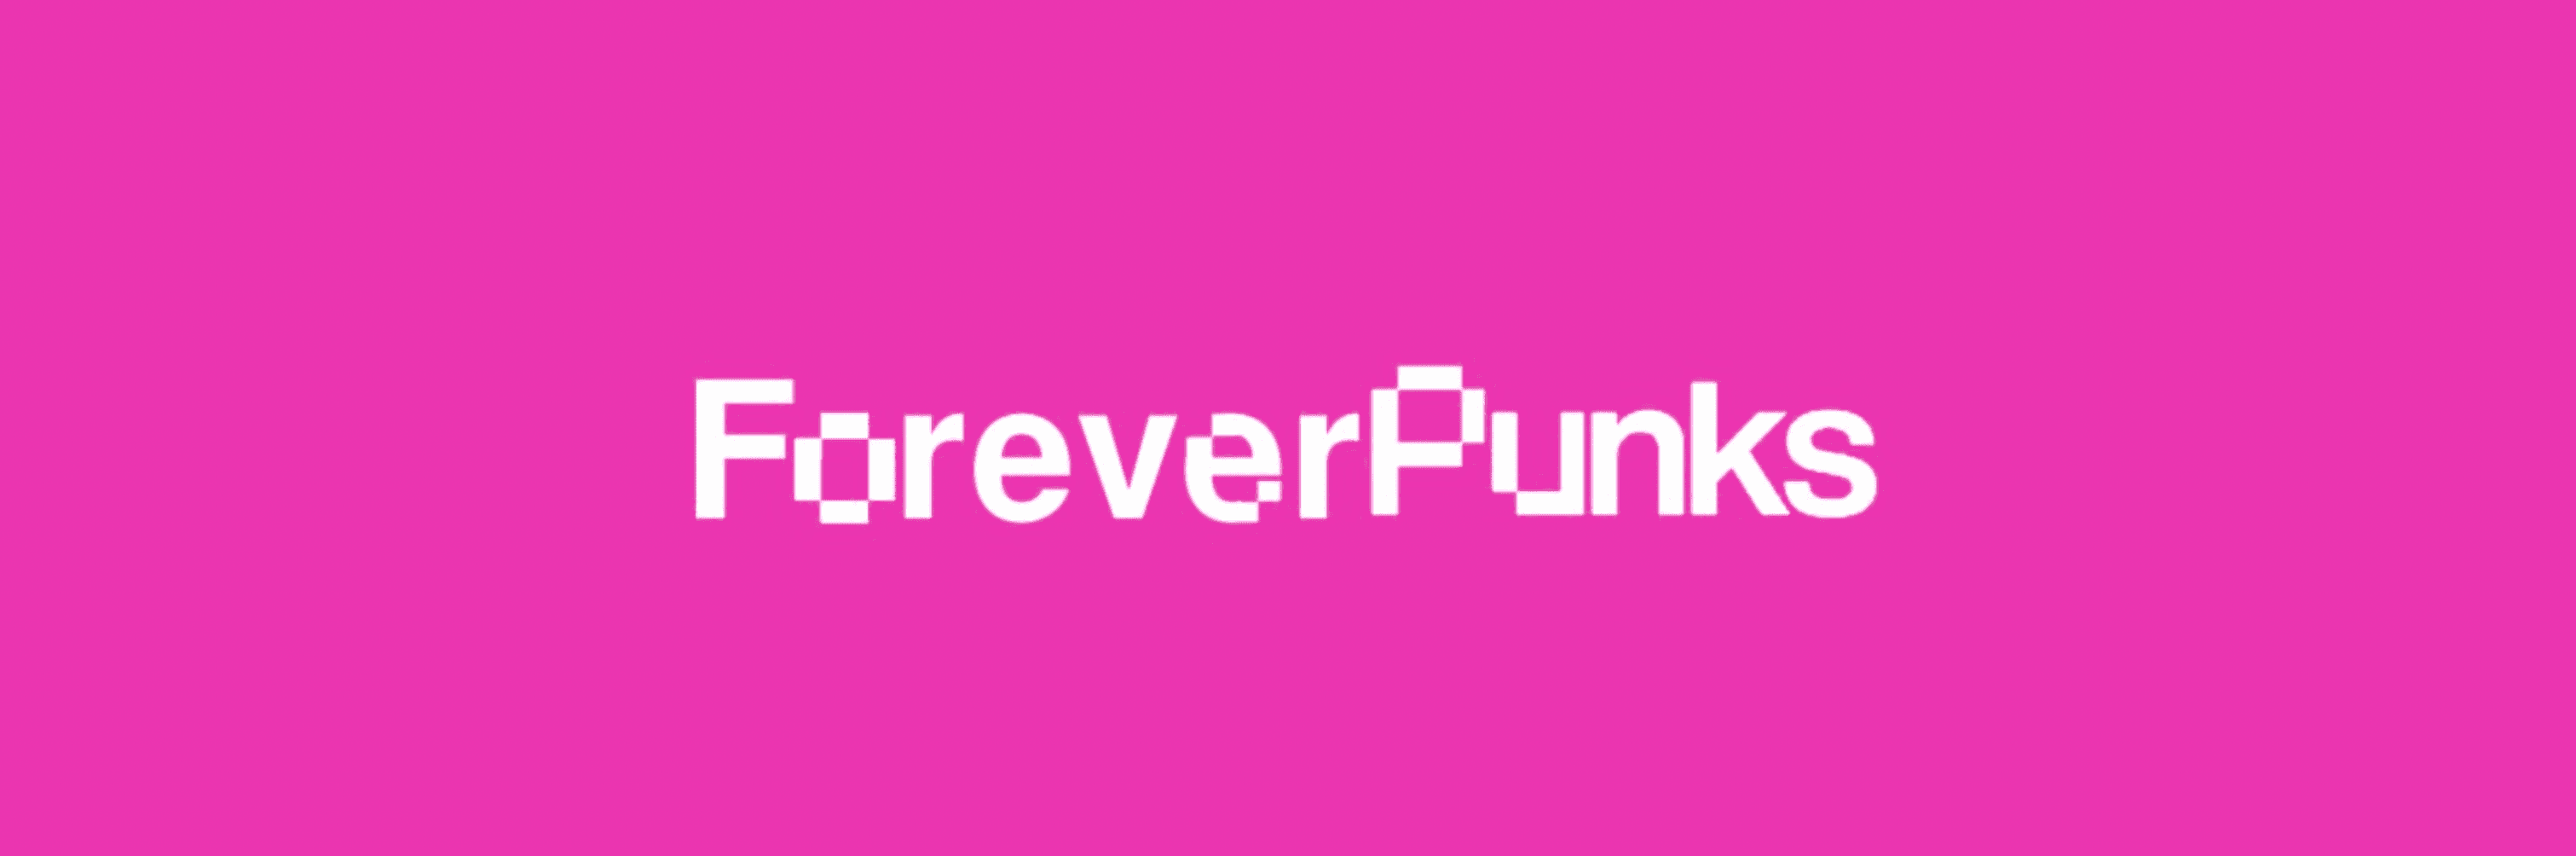 Foreverpunks_eth バナー